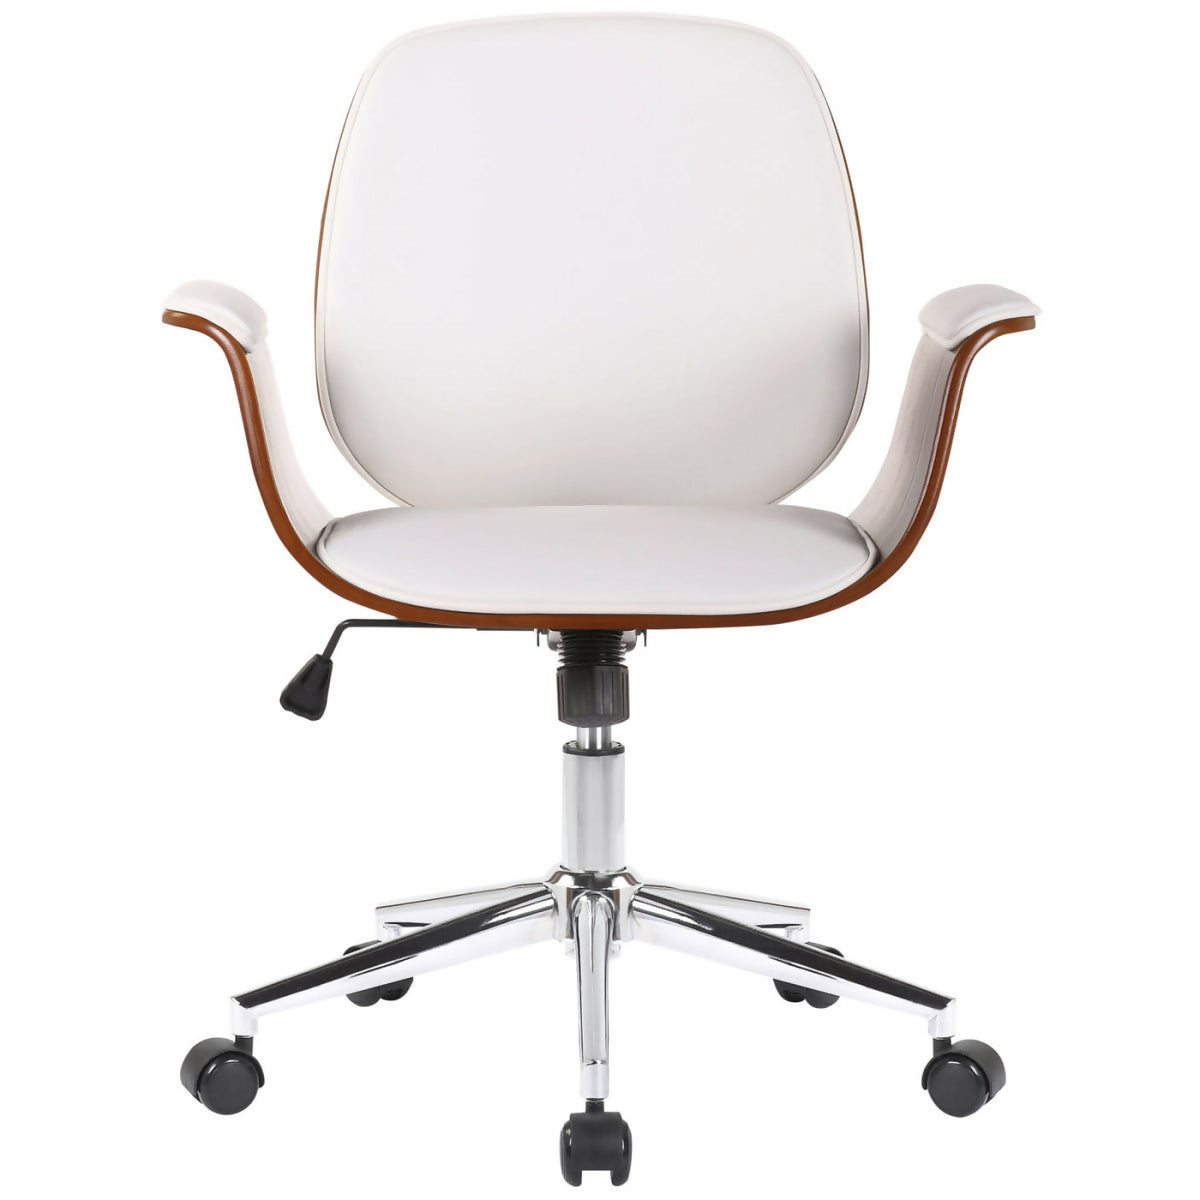 Kemberg office armchair - Walnut - White